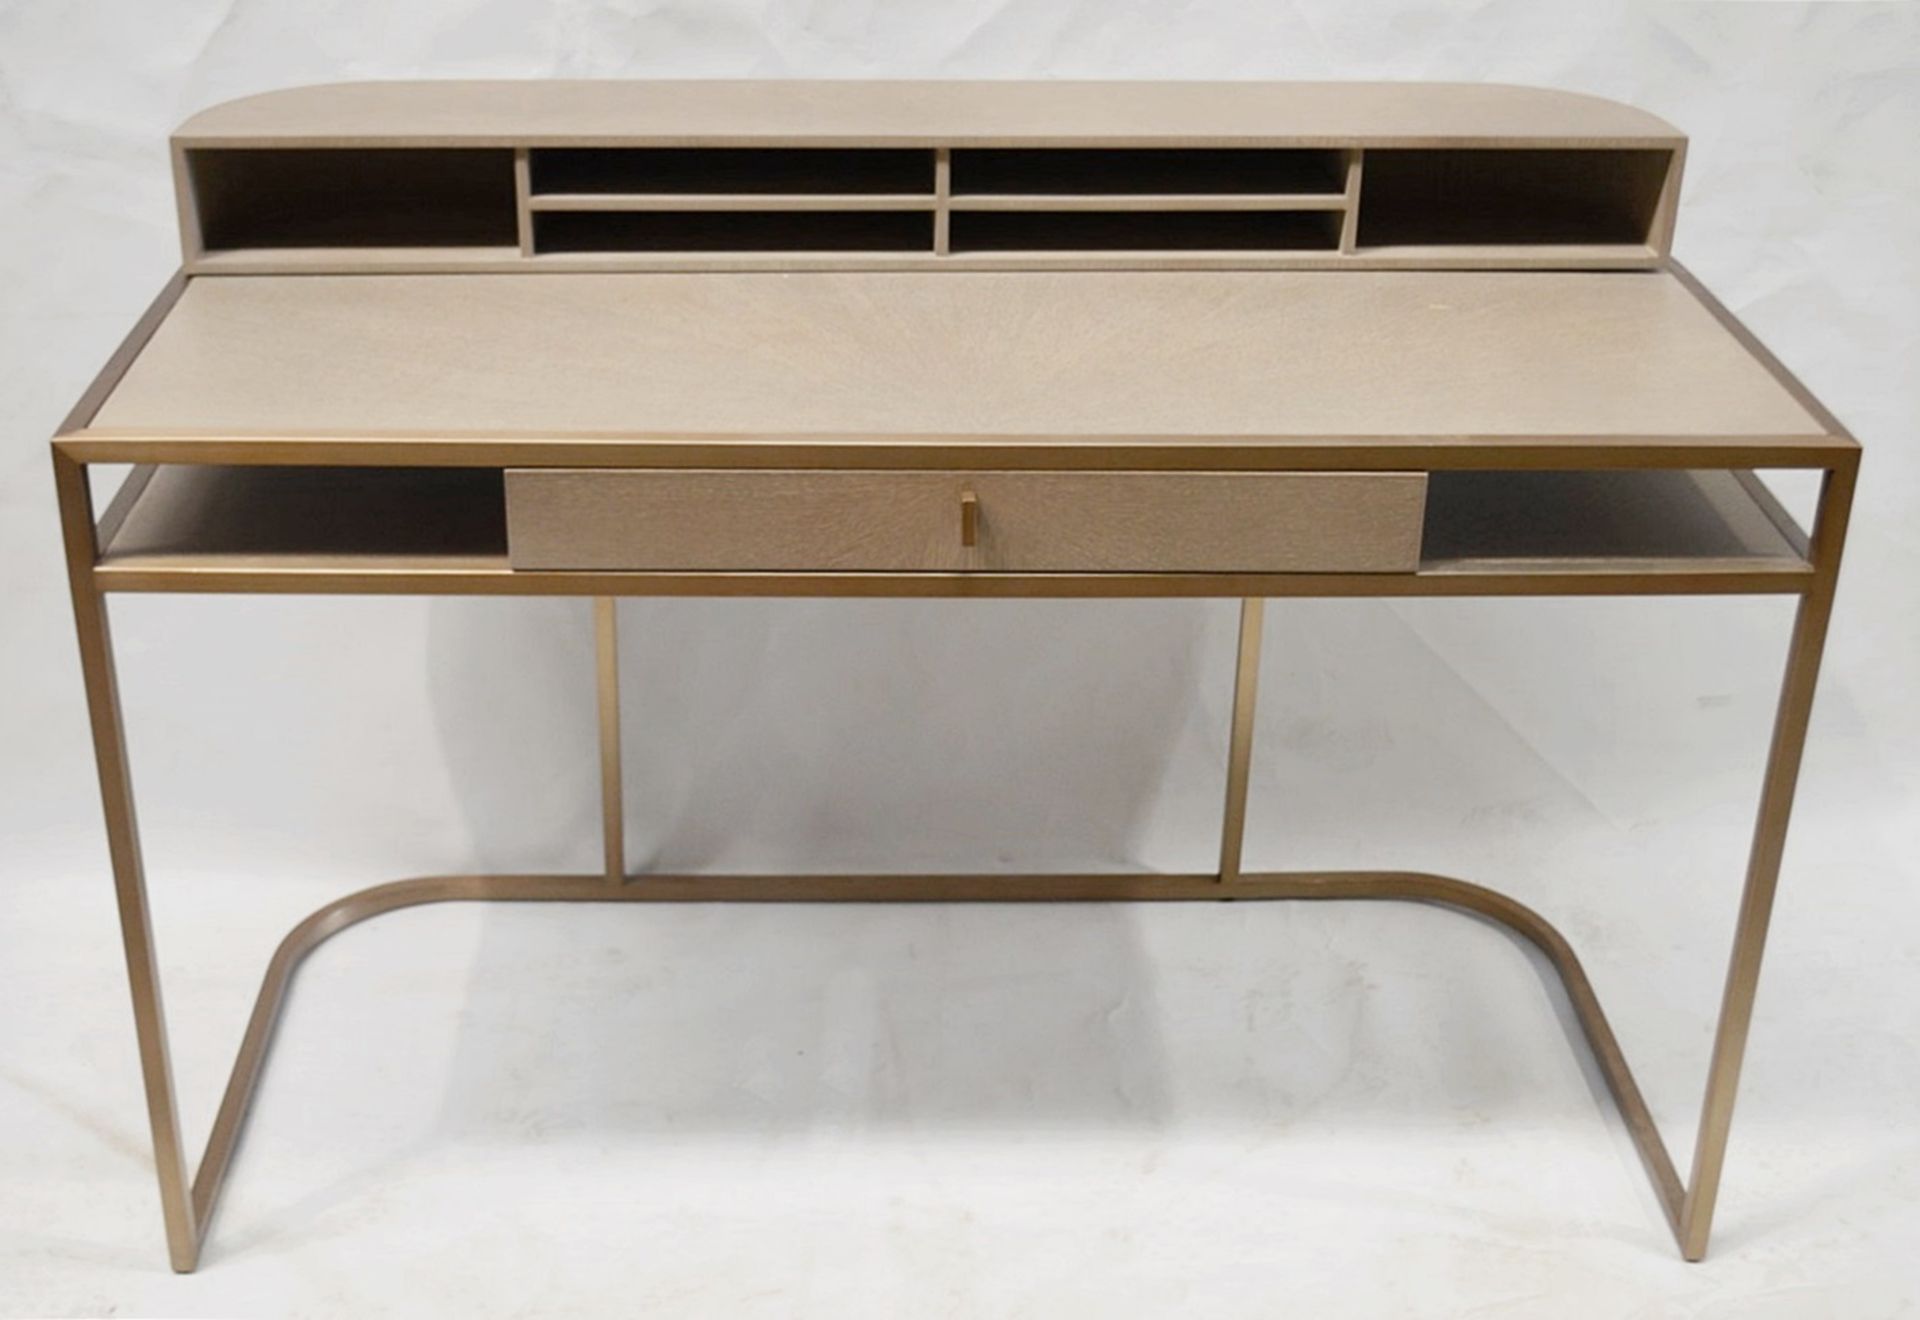 1 x EICHHOLTZ 'Highland' Designer Desk With Washed Oak And Brushed Brass Finishes - Ex-Display - - Image 5 of 12